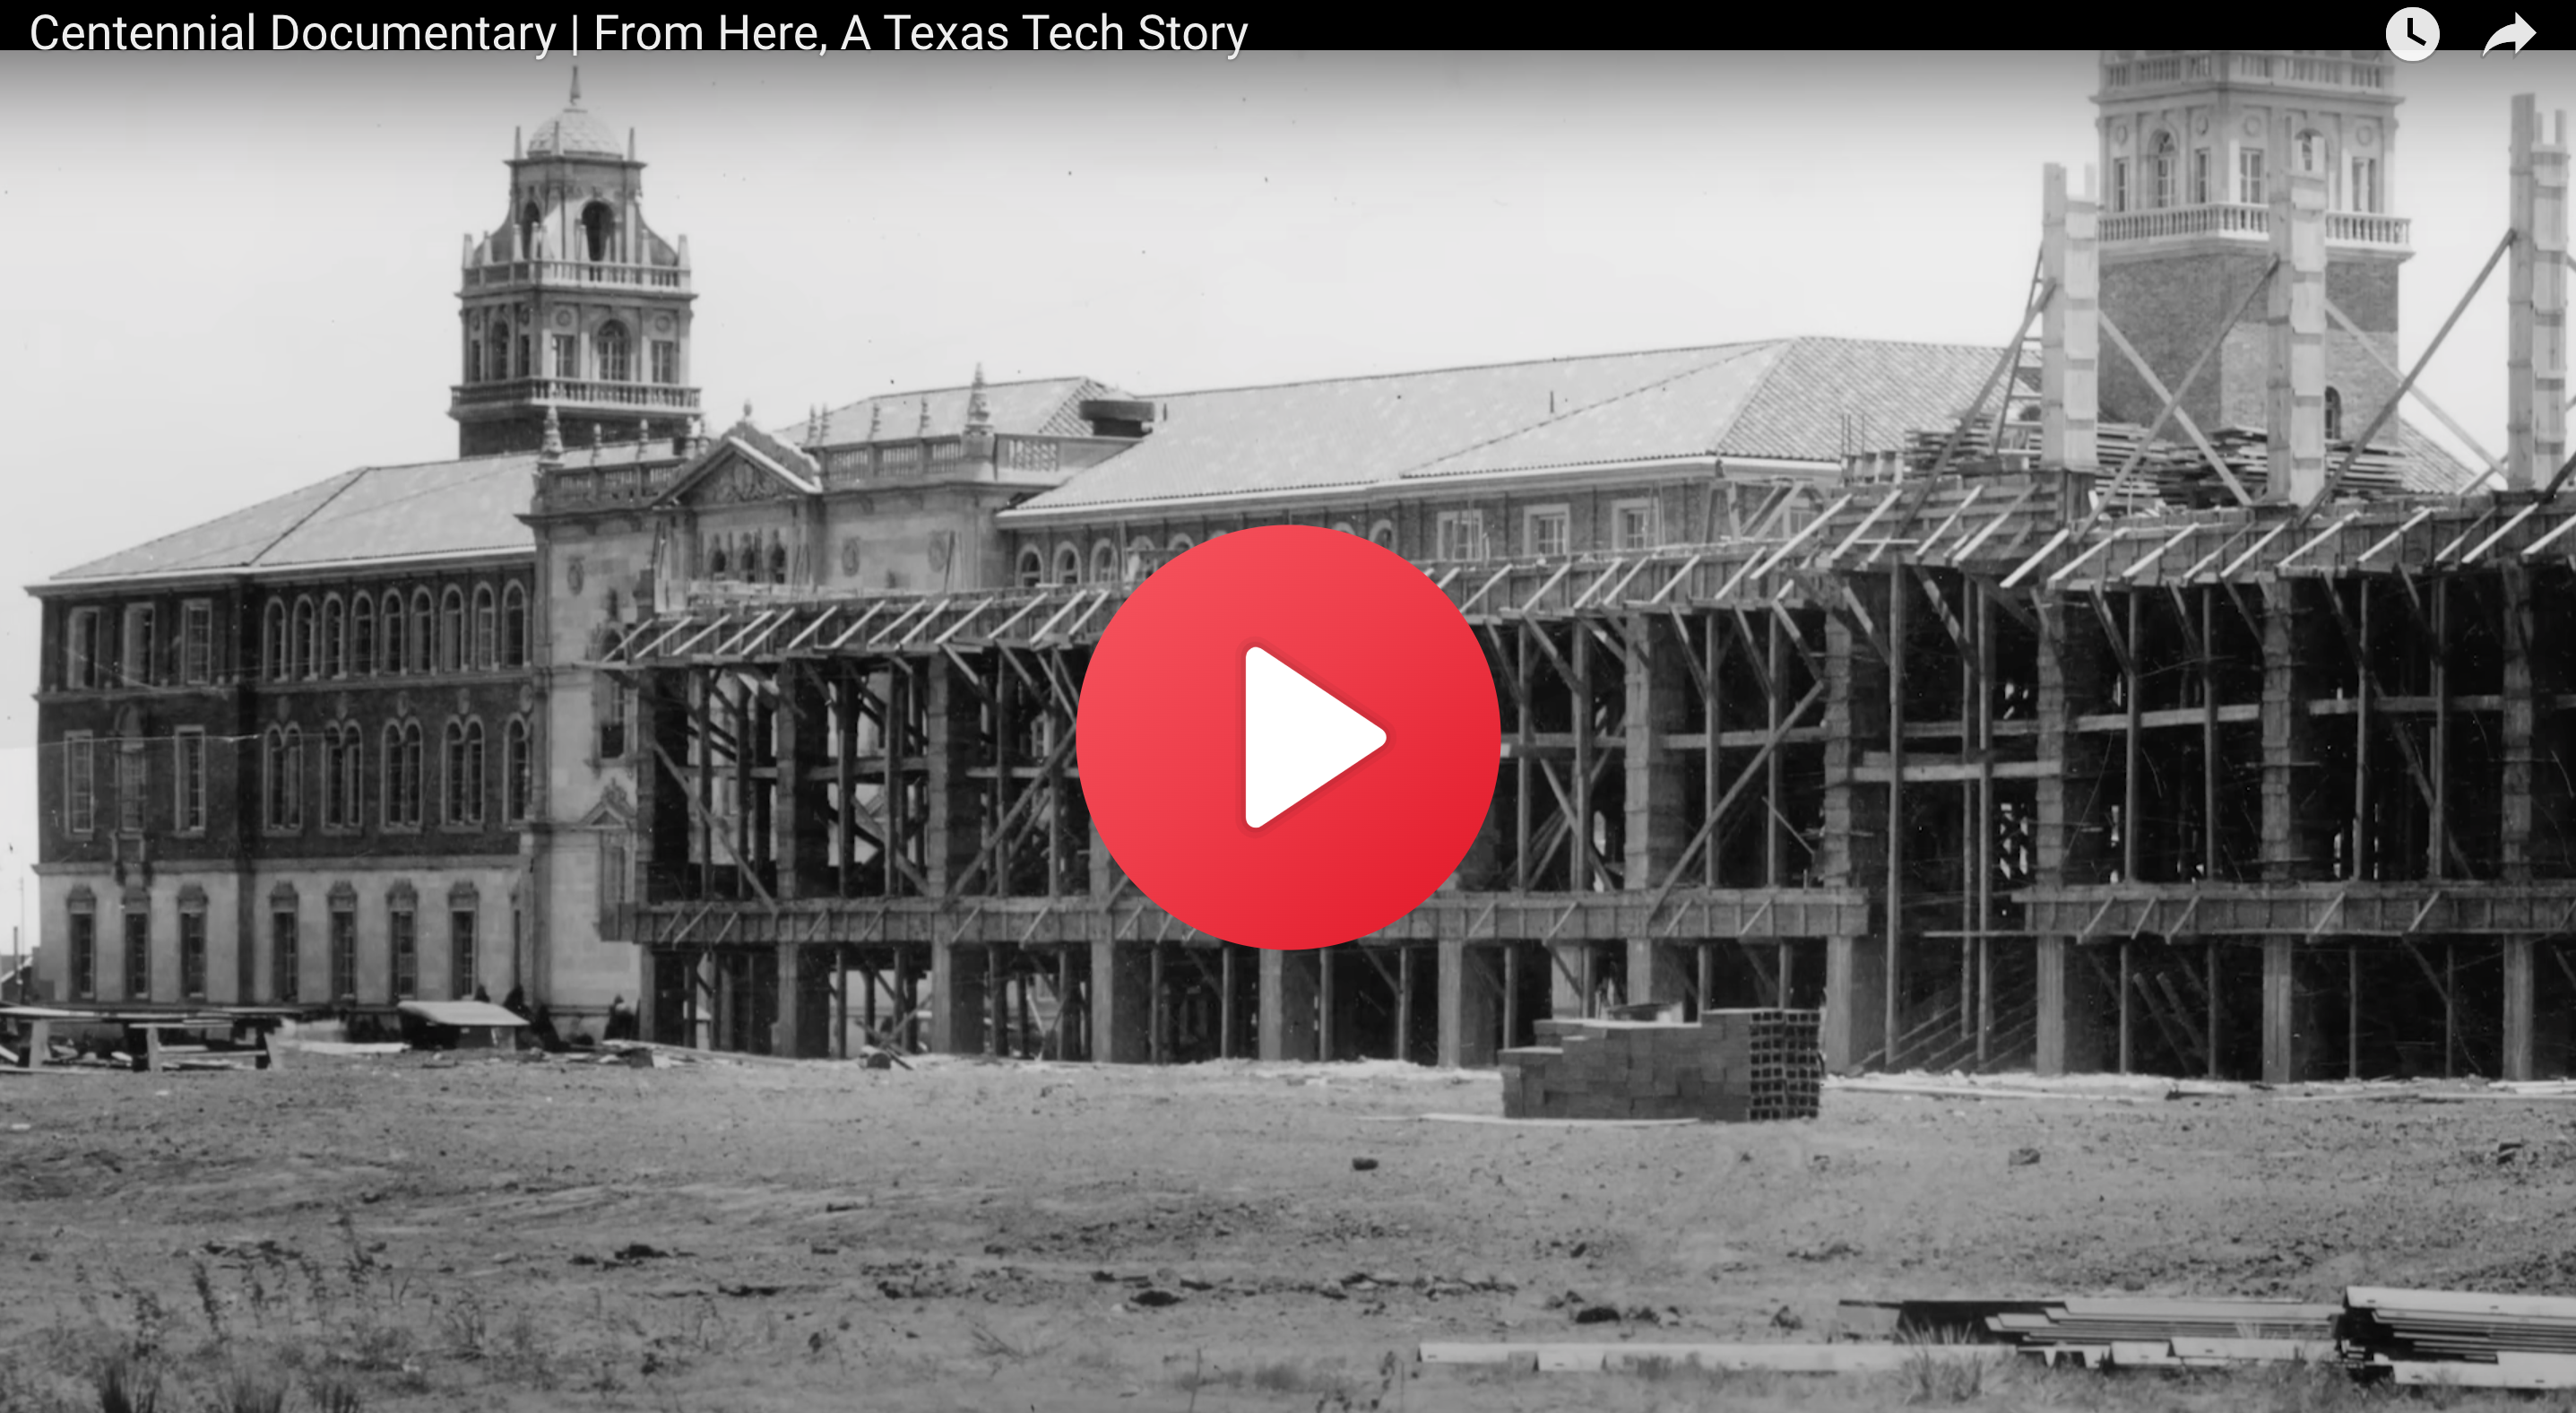 TTU History Video